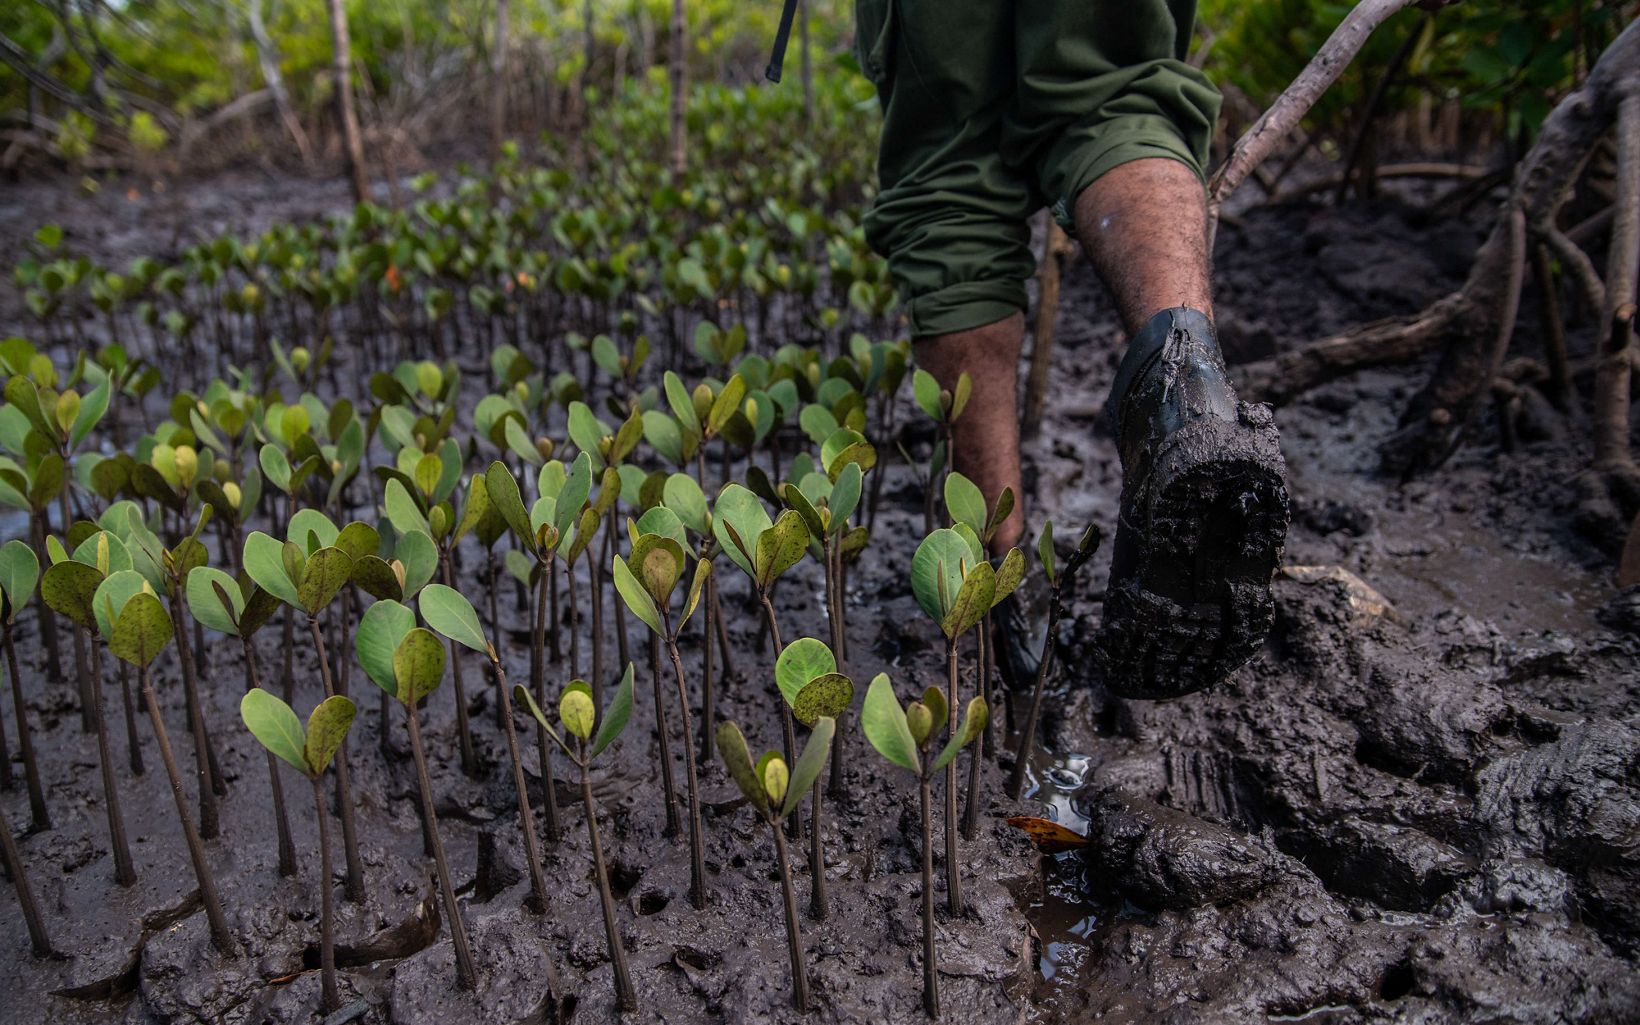 Muddy boots walking through mangrove saplings 